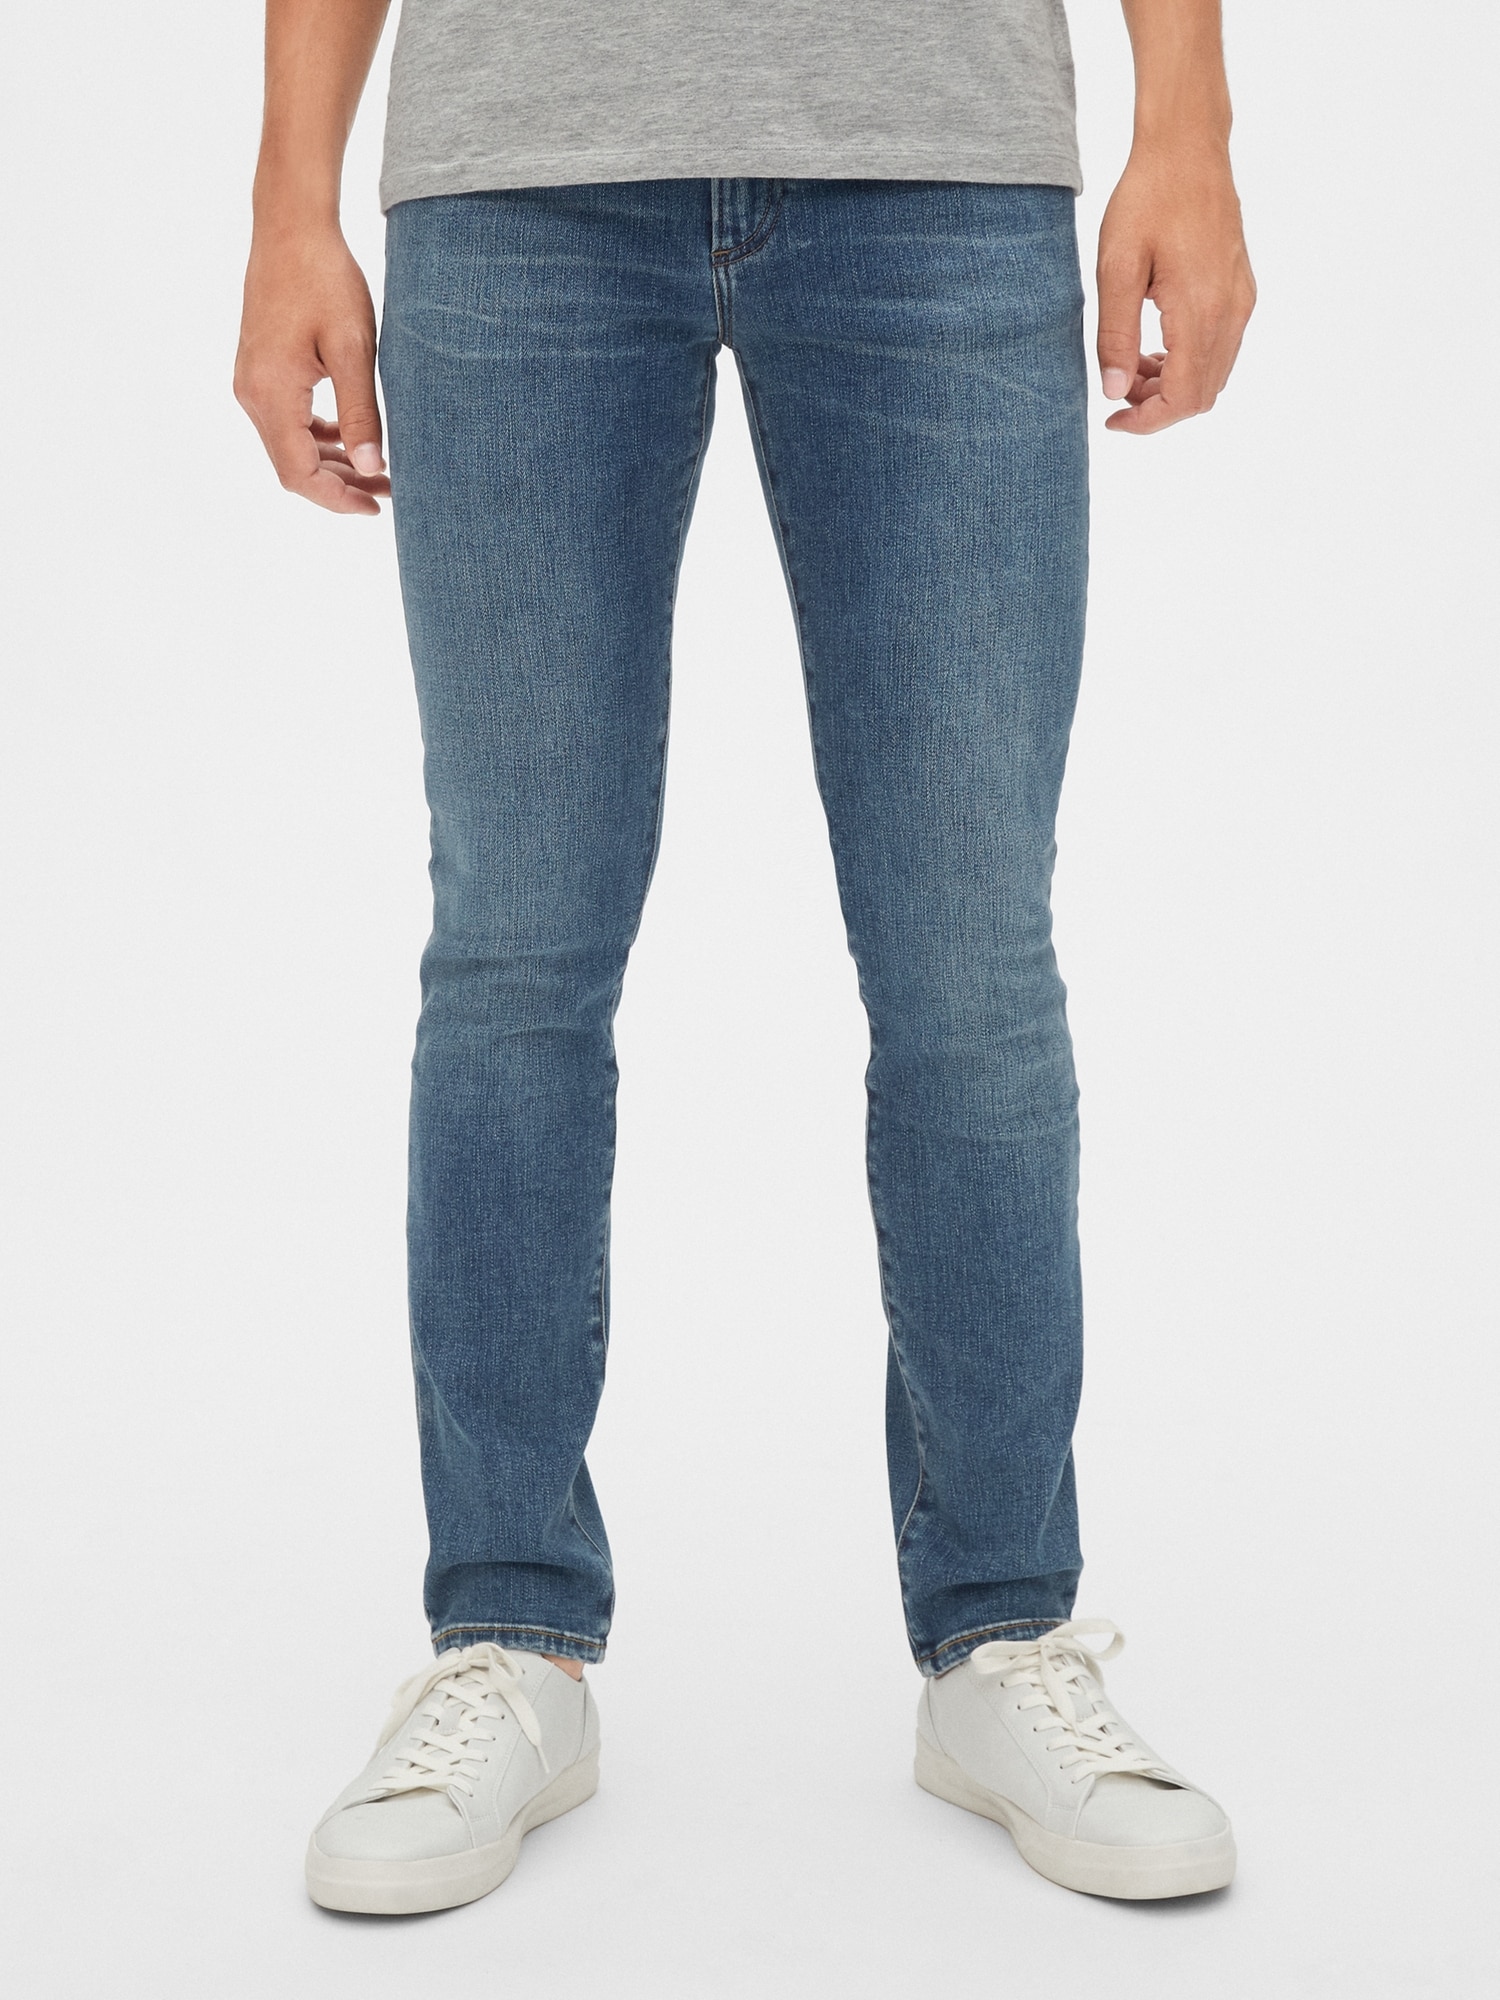 Gap Flex Soft Wear Skinny Jean Pantolon. 3